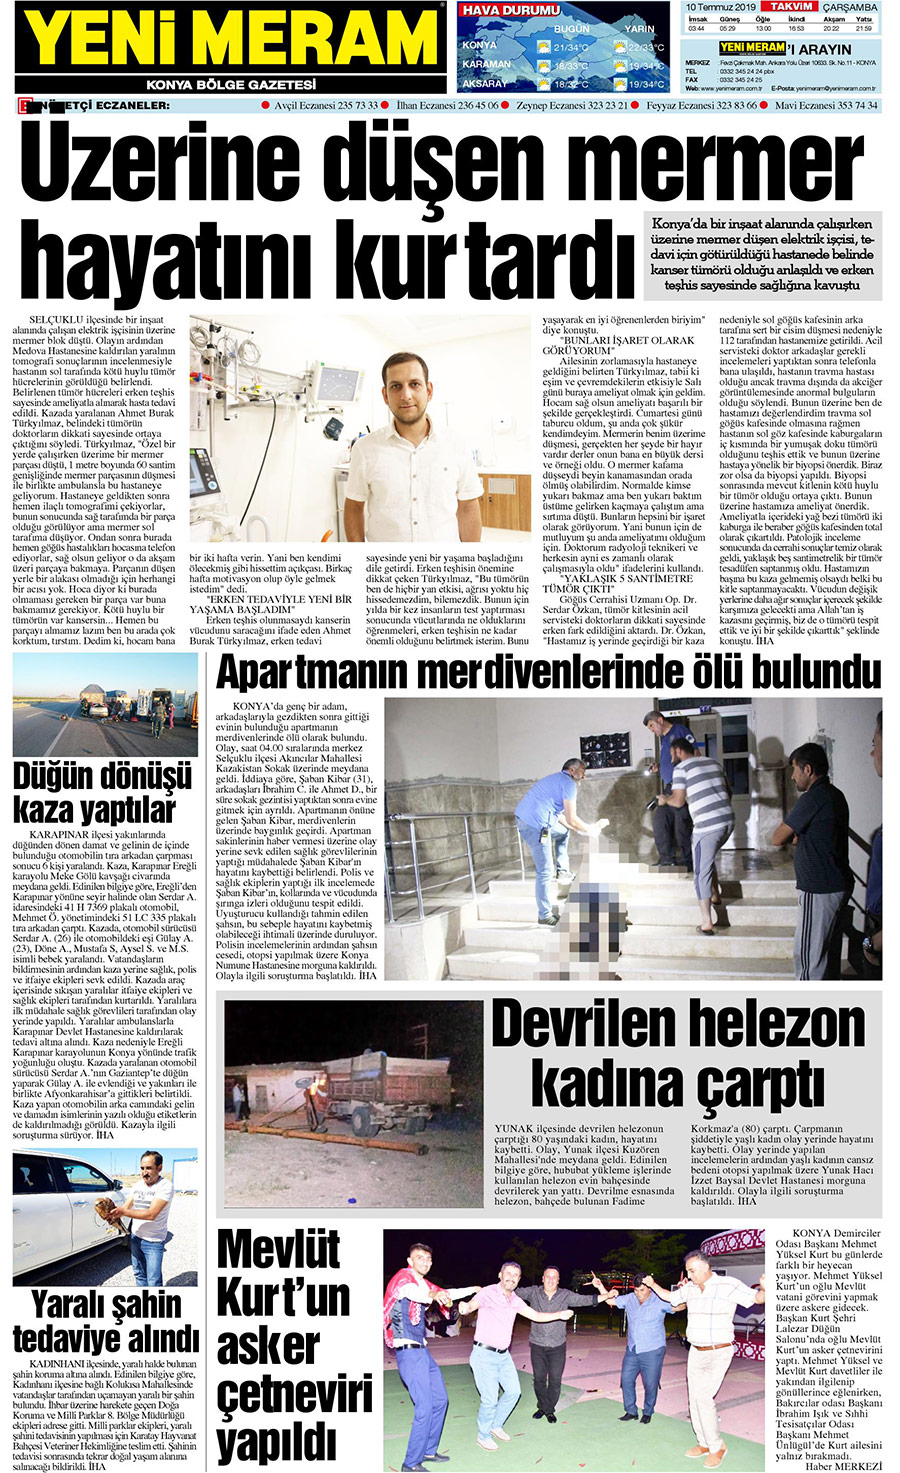 10 Temmuz 2019 Yeni Meram Gazetesi